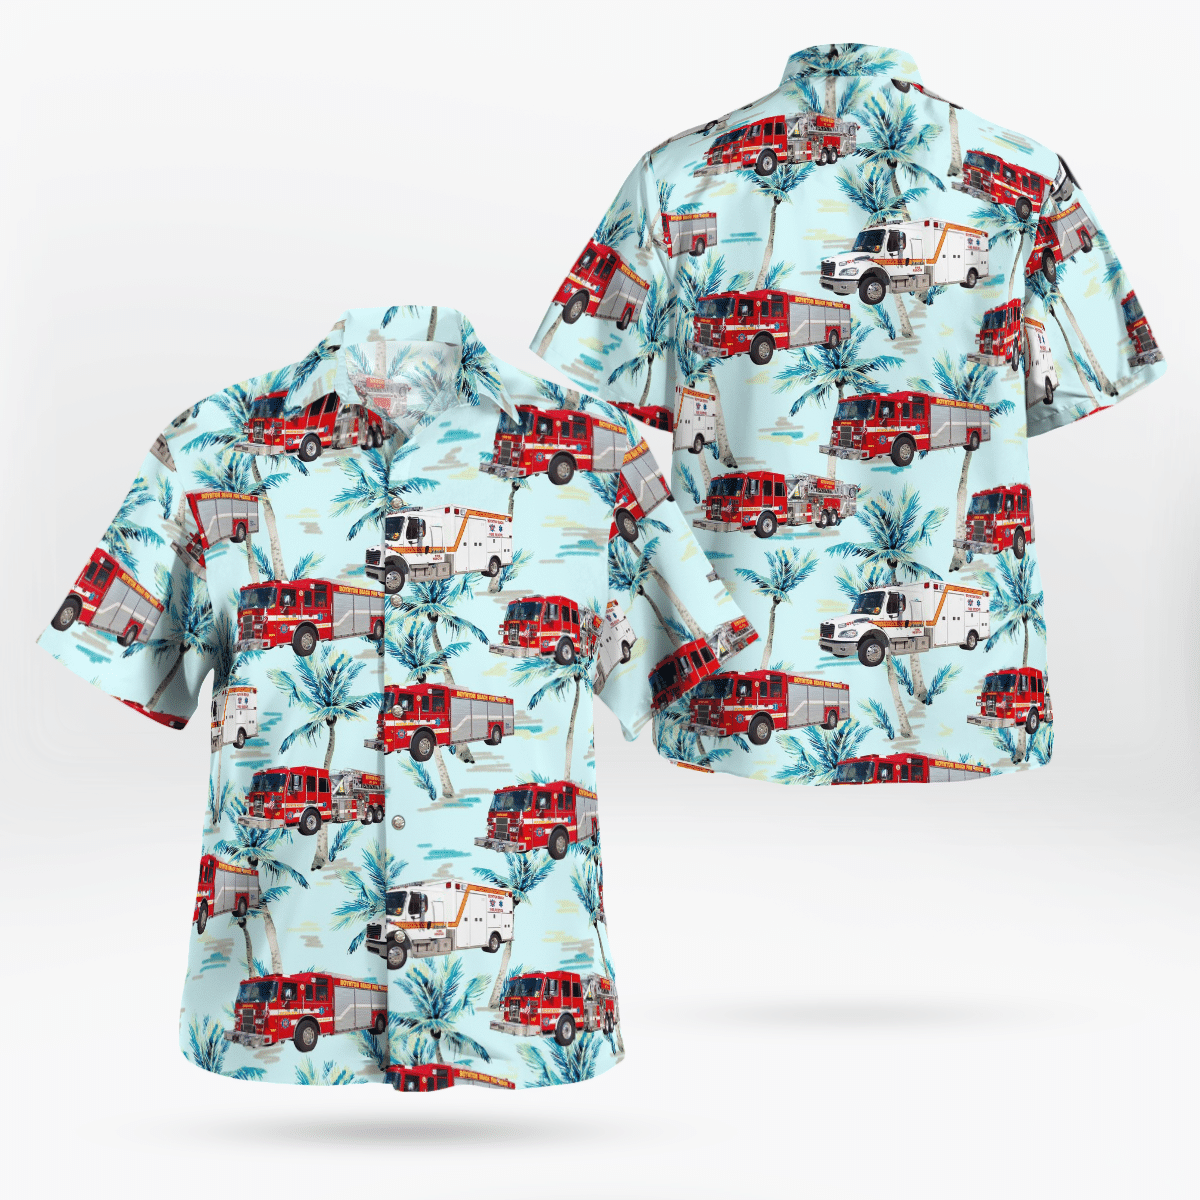 Why don't you order Hot Hawaiian Shirt today? 241